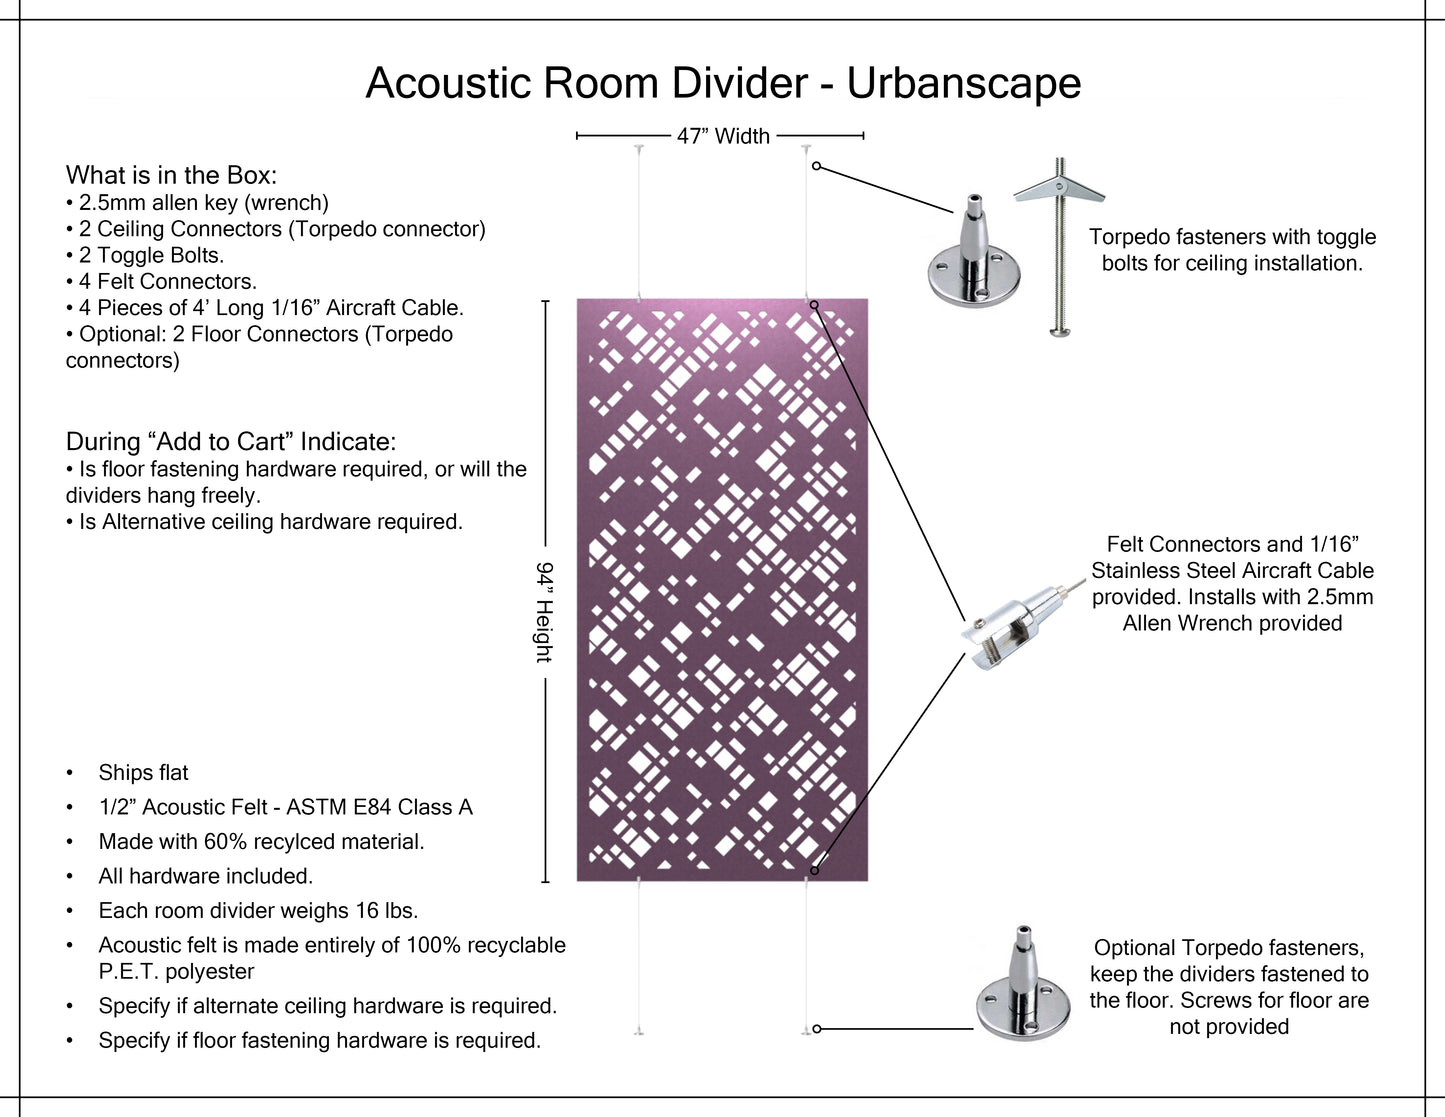 4x8 Acoustic Room Divider - Urbanscape